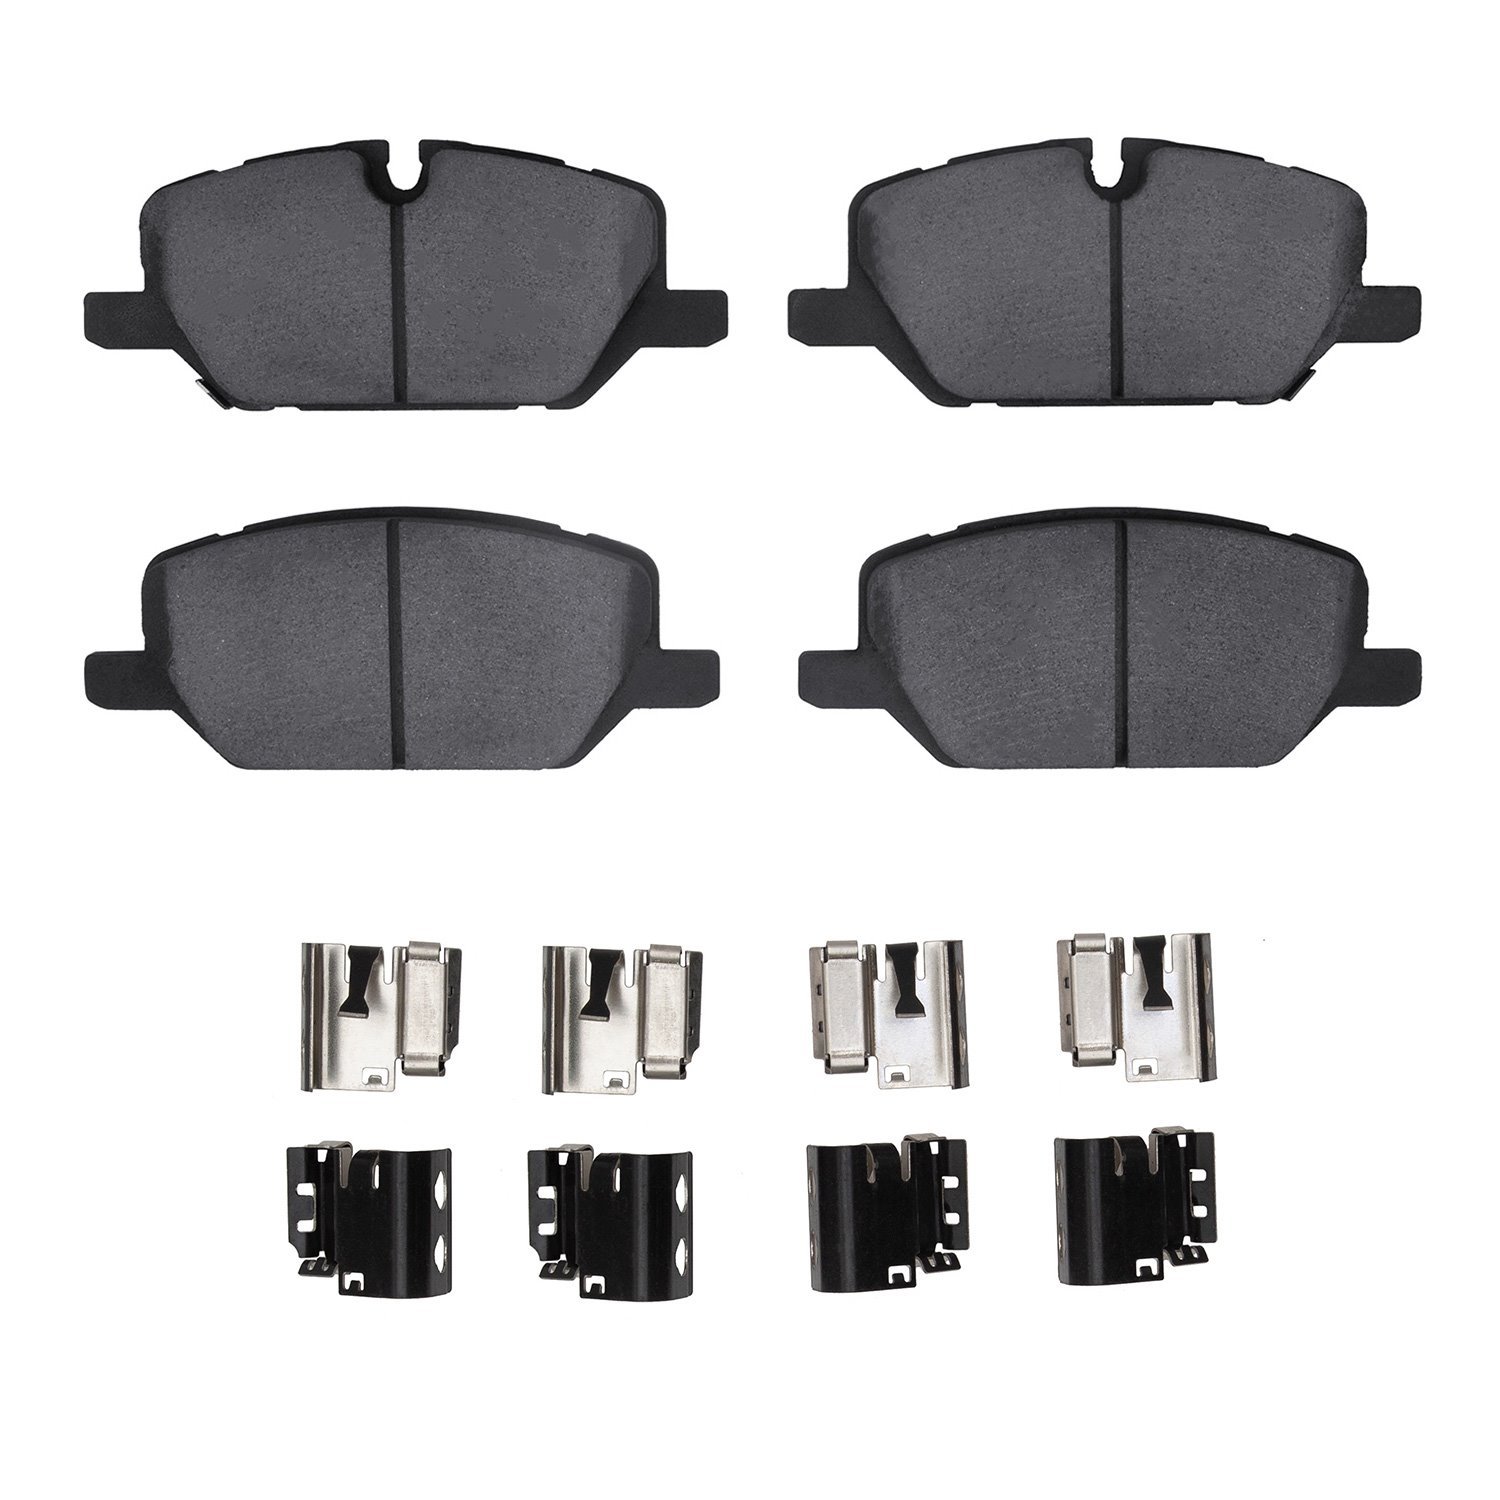 1551-2314-01 5000 Advanced Ceramic Brake Pads & Hardware Kit, Fits Select GM, Position: Front